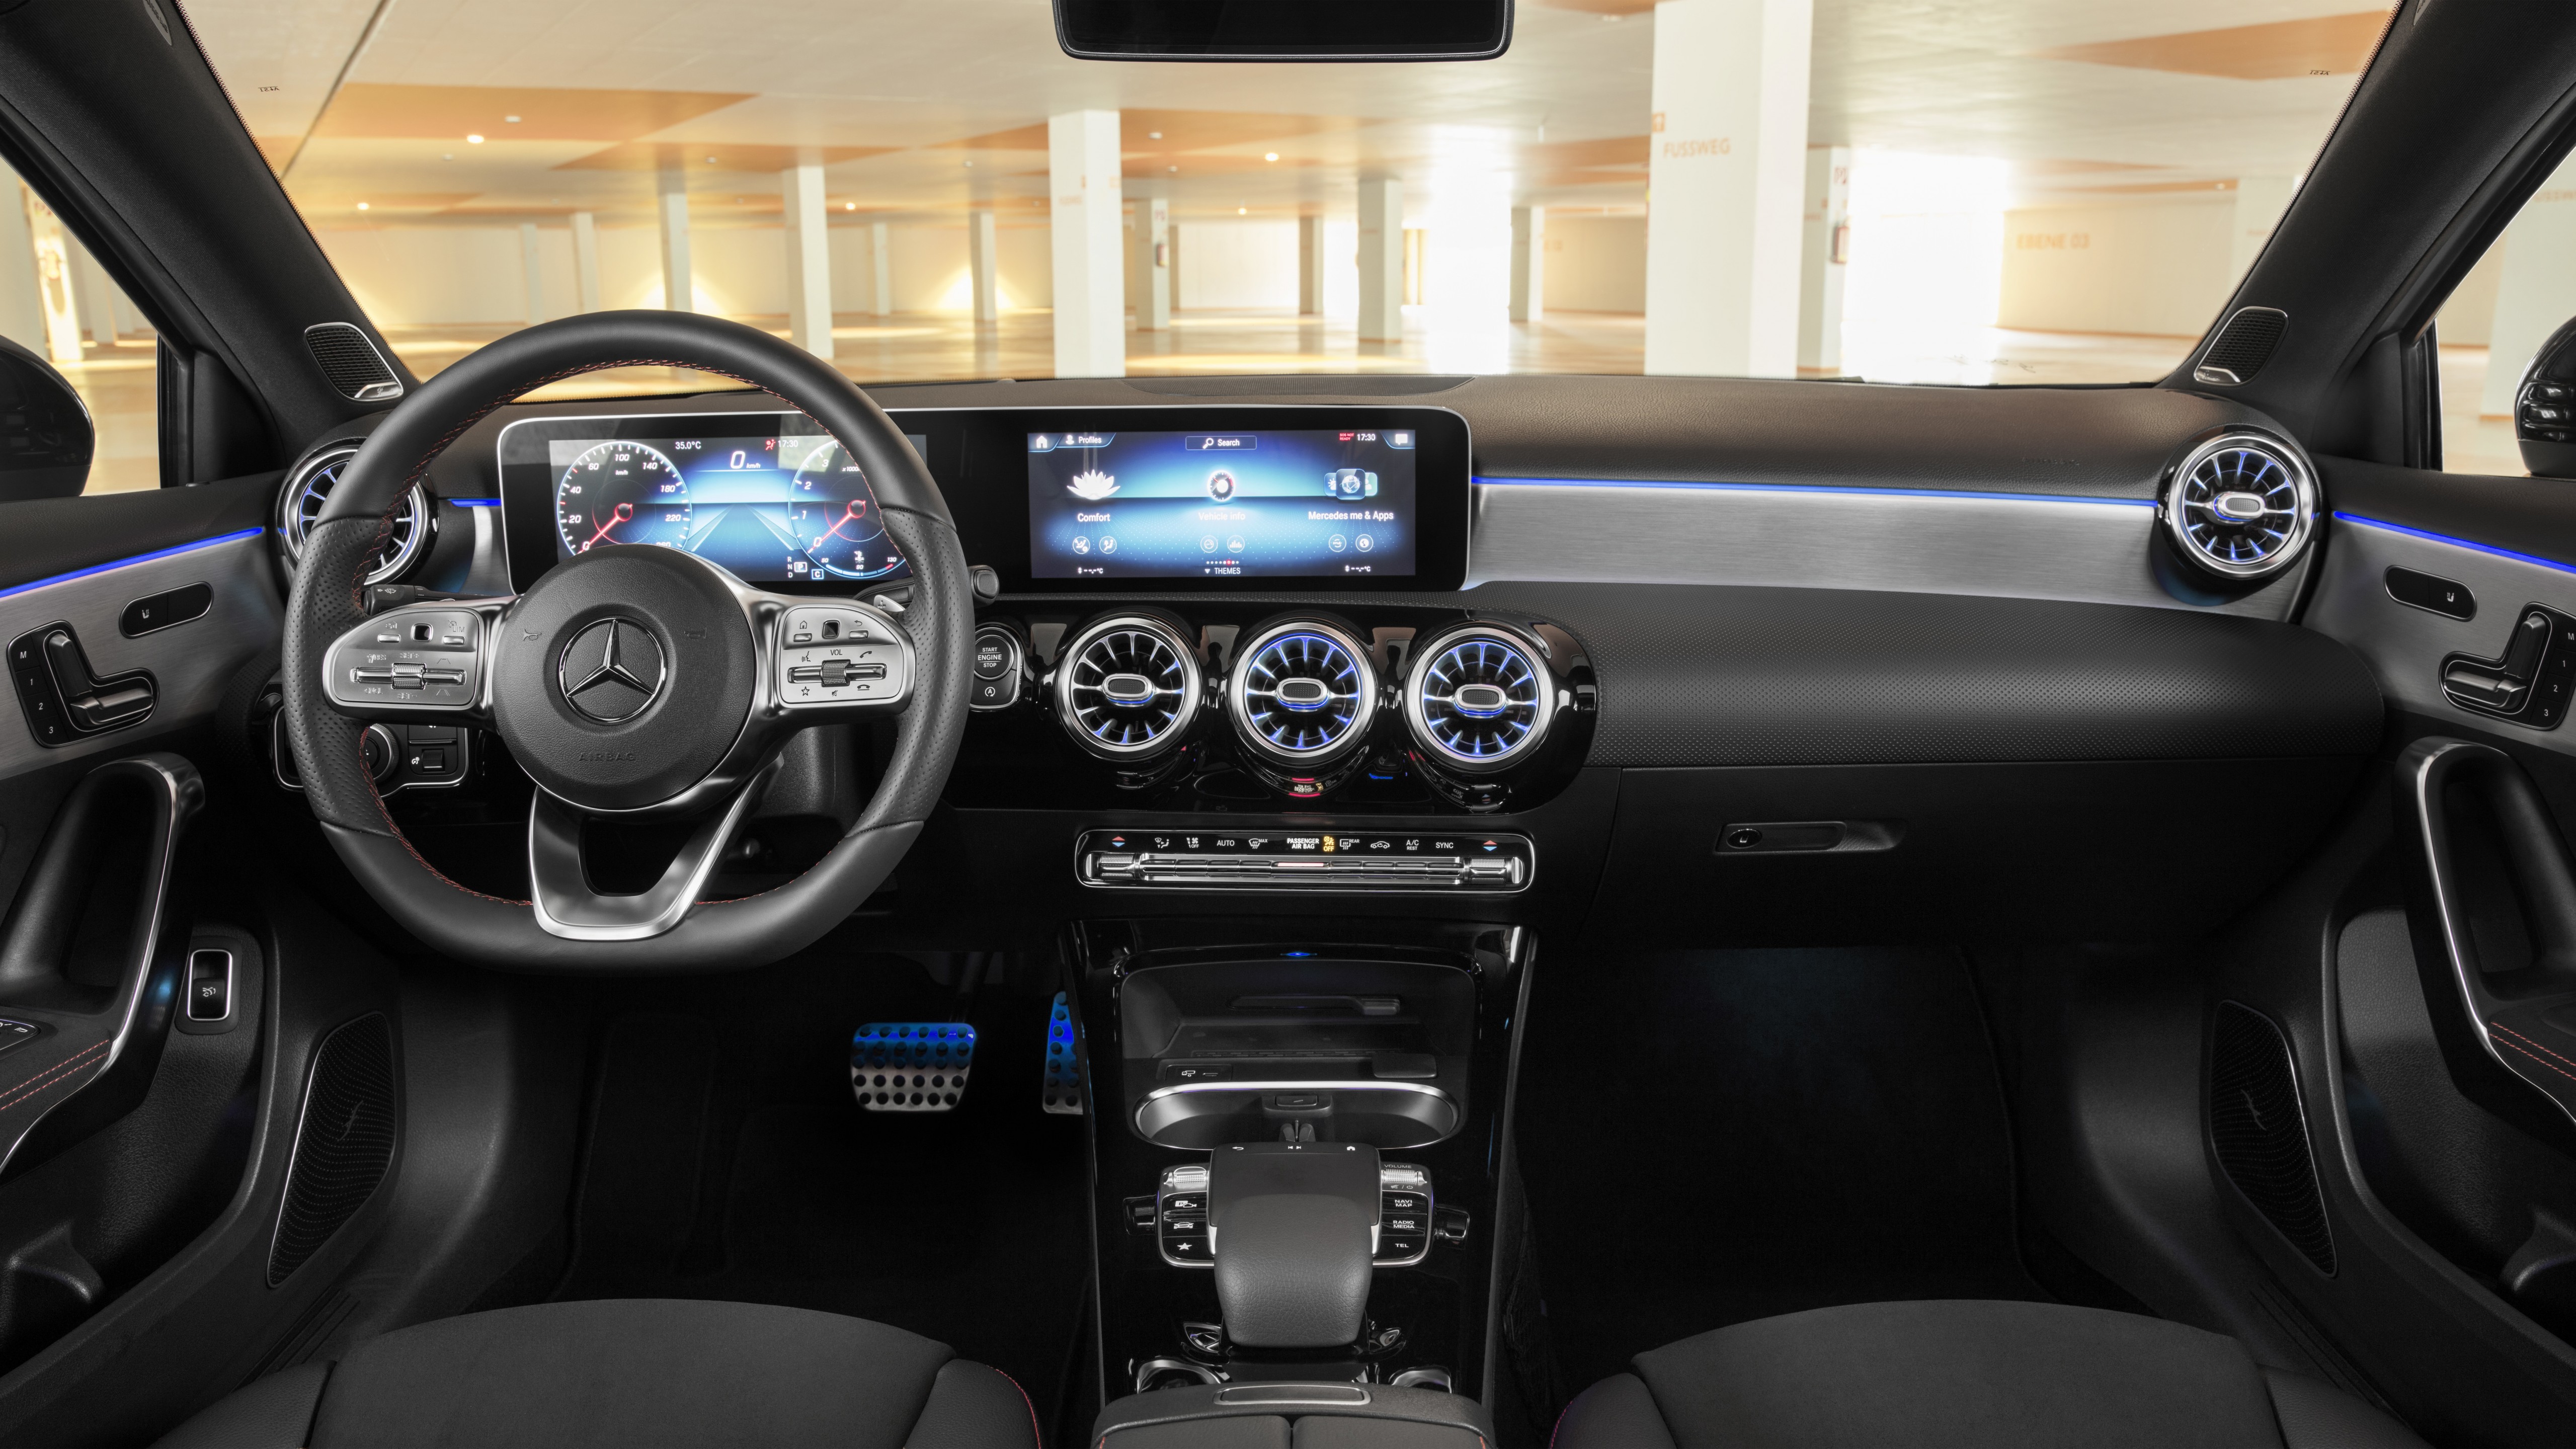 Mercedes-Benz A180D Wallpapers